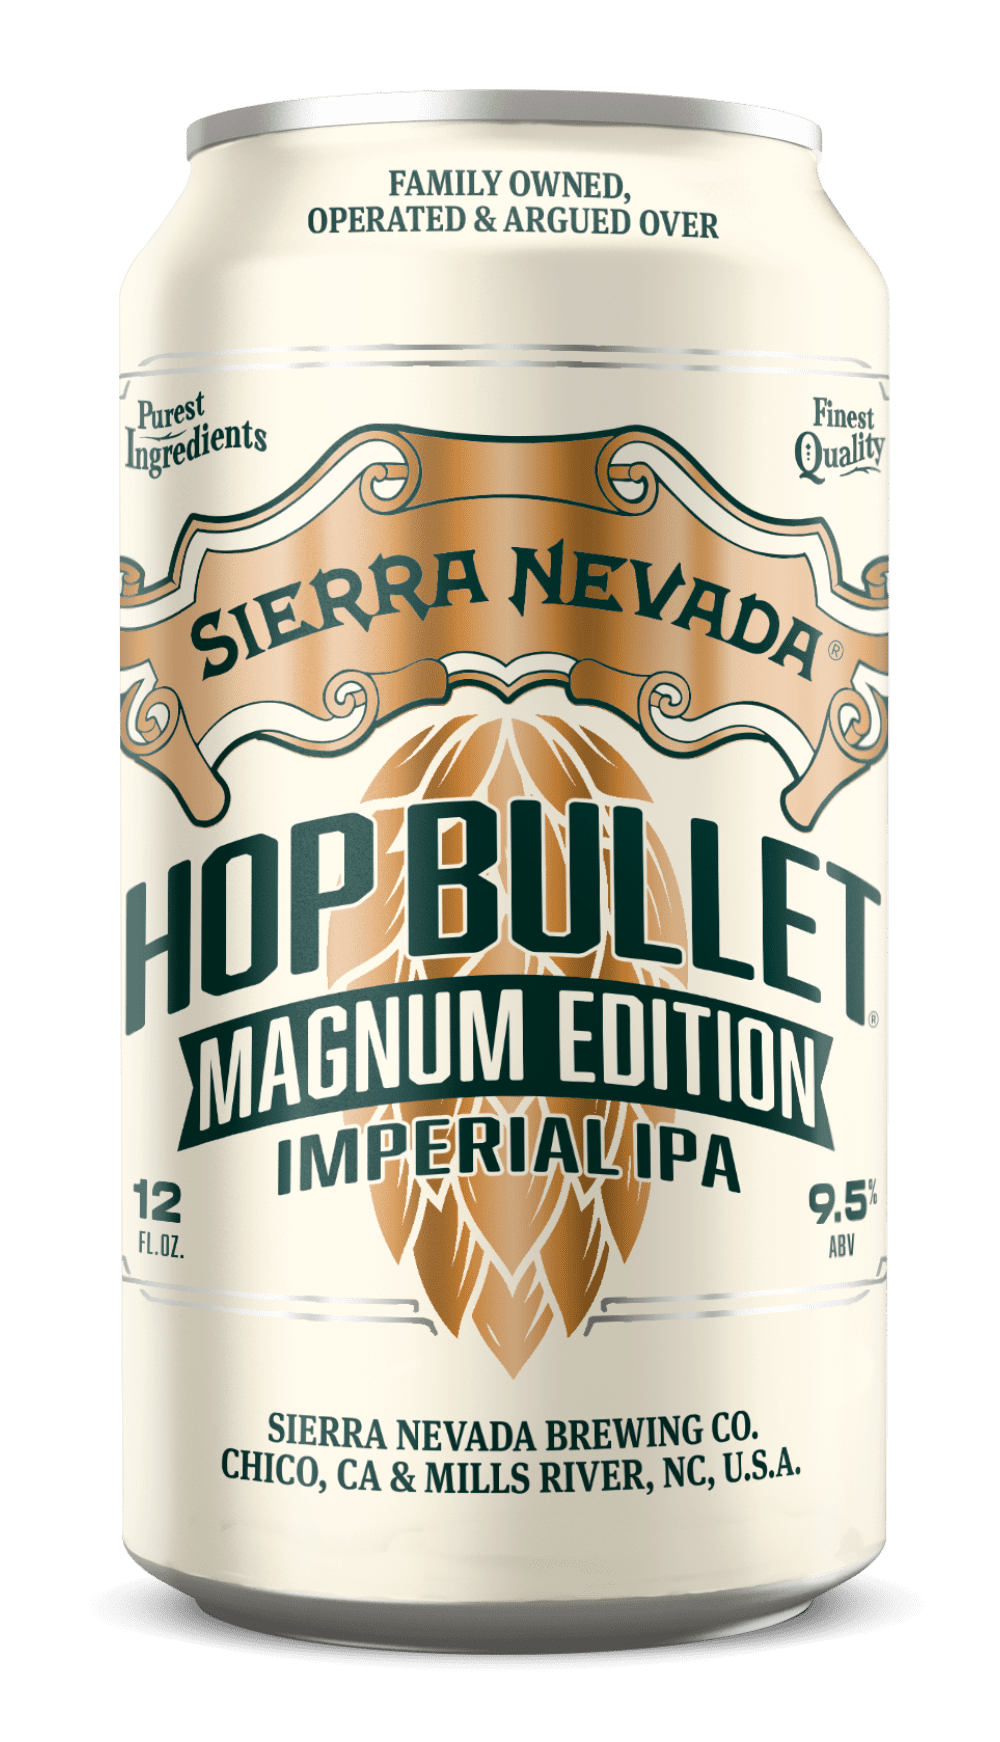 Hop Bullet Magnum Sierra Nevada Brewing Co